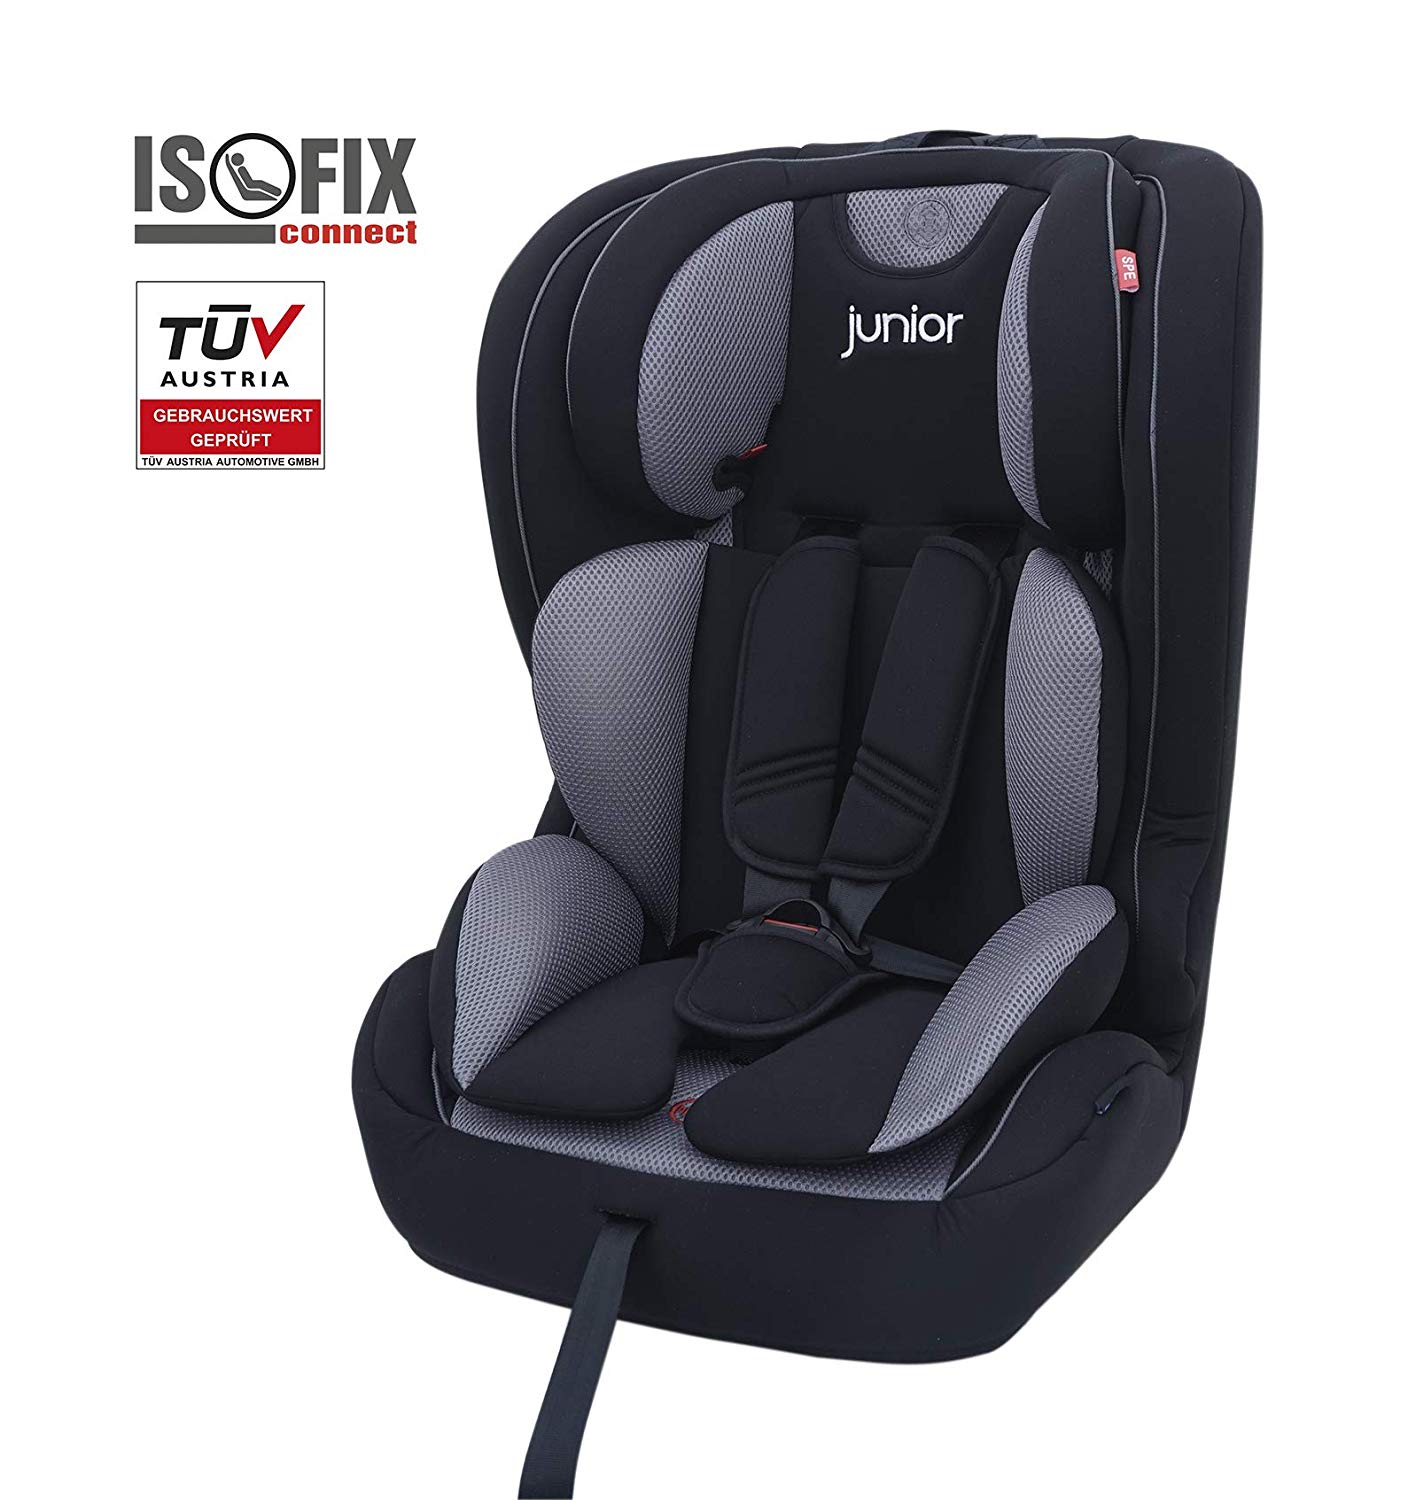 Petex Isofix Premium Plus Child Seat Group 1 2 3 According to ECE R44/04